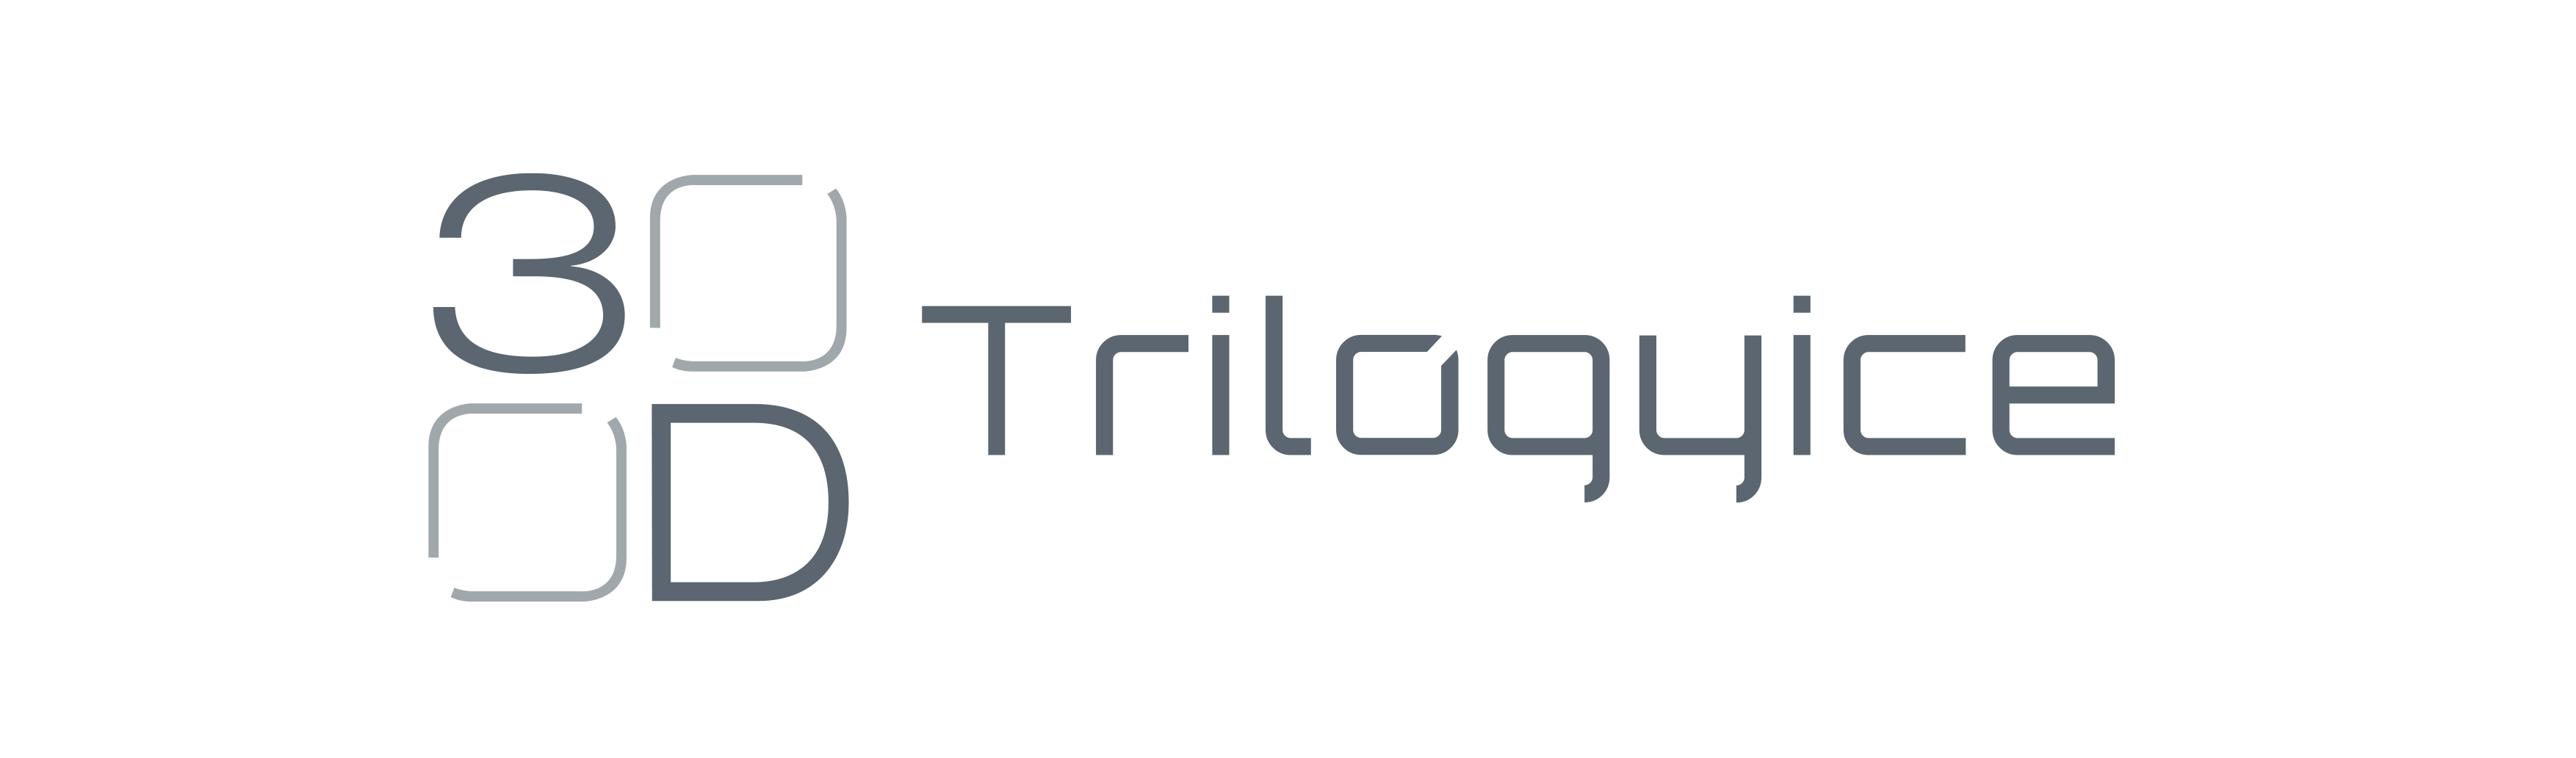 Trilogyice Logo